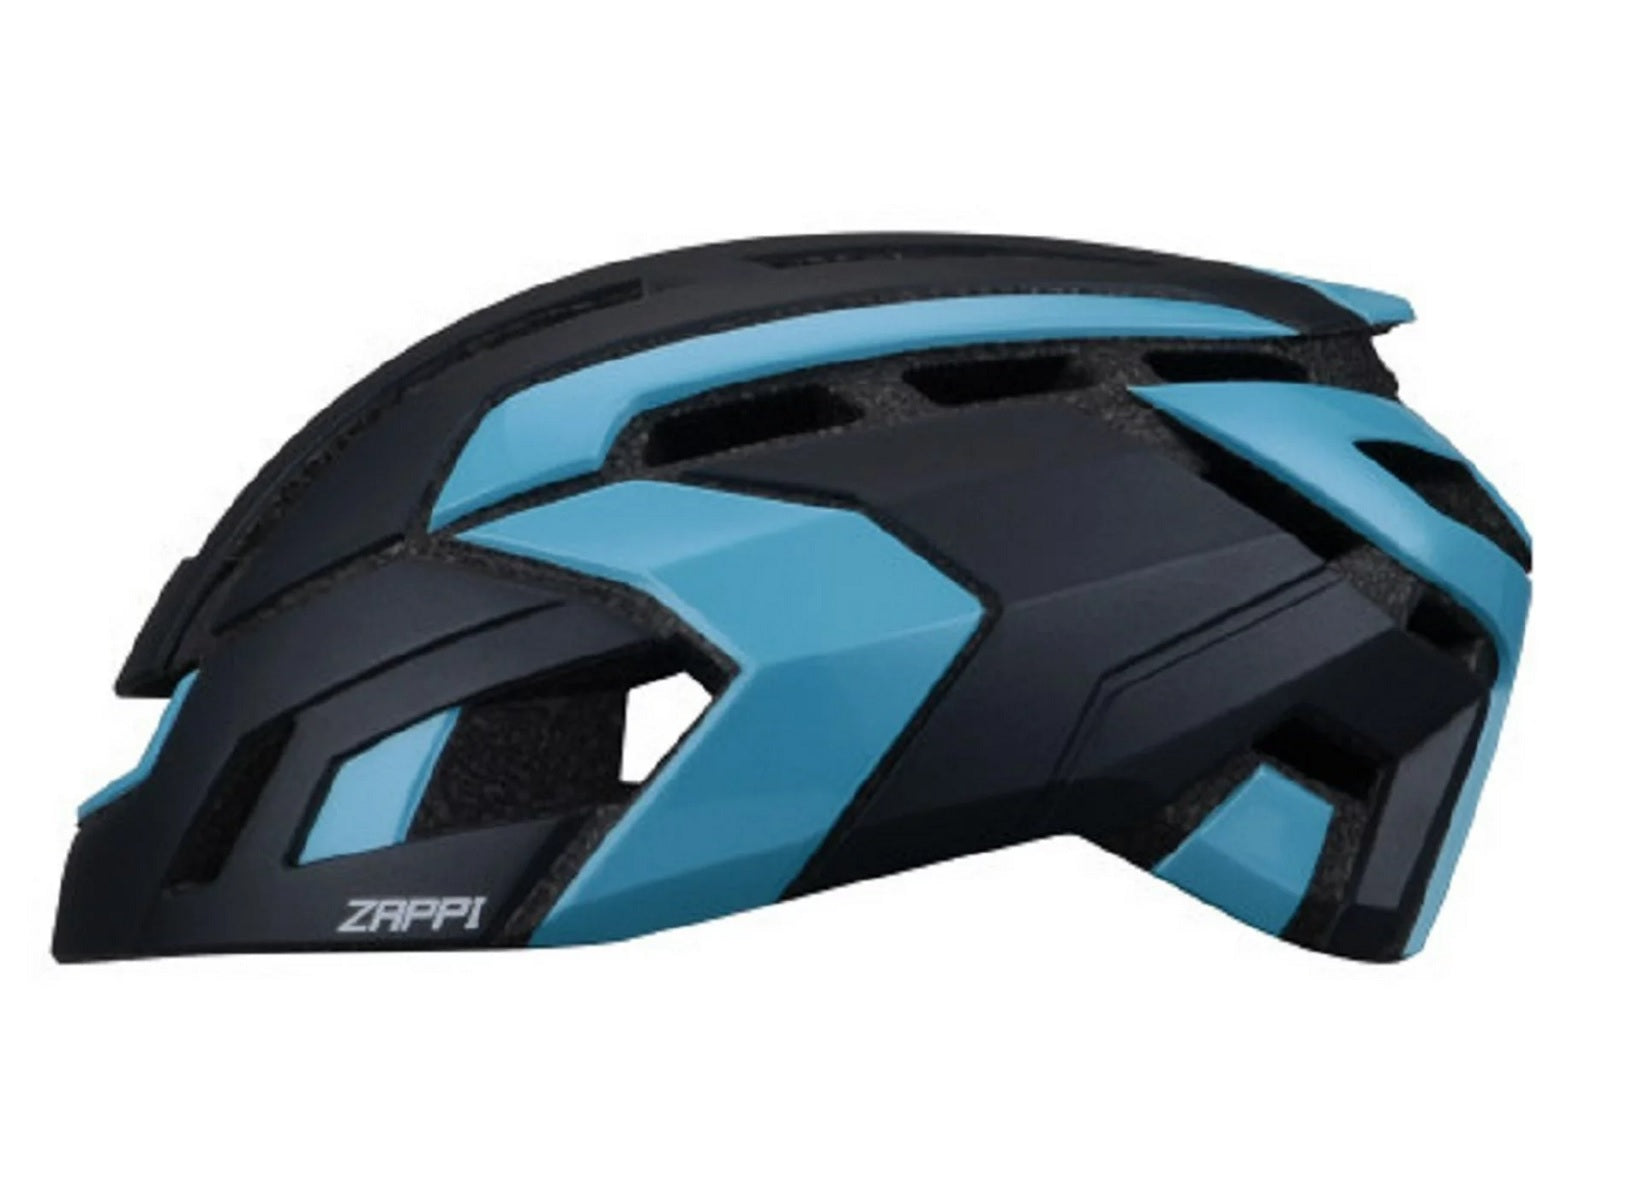 NOW ZAPPI Bike Cycling Helmet - Aerodynamic Bicycle Matte Black/Sky Blue L/XL